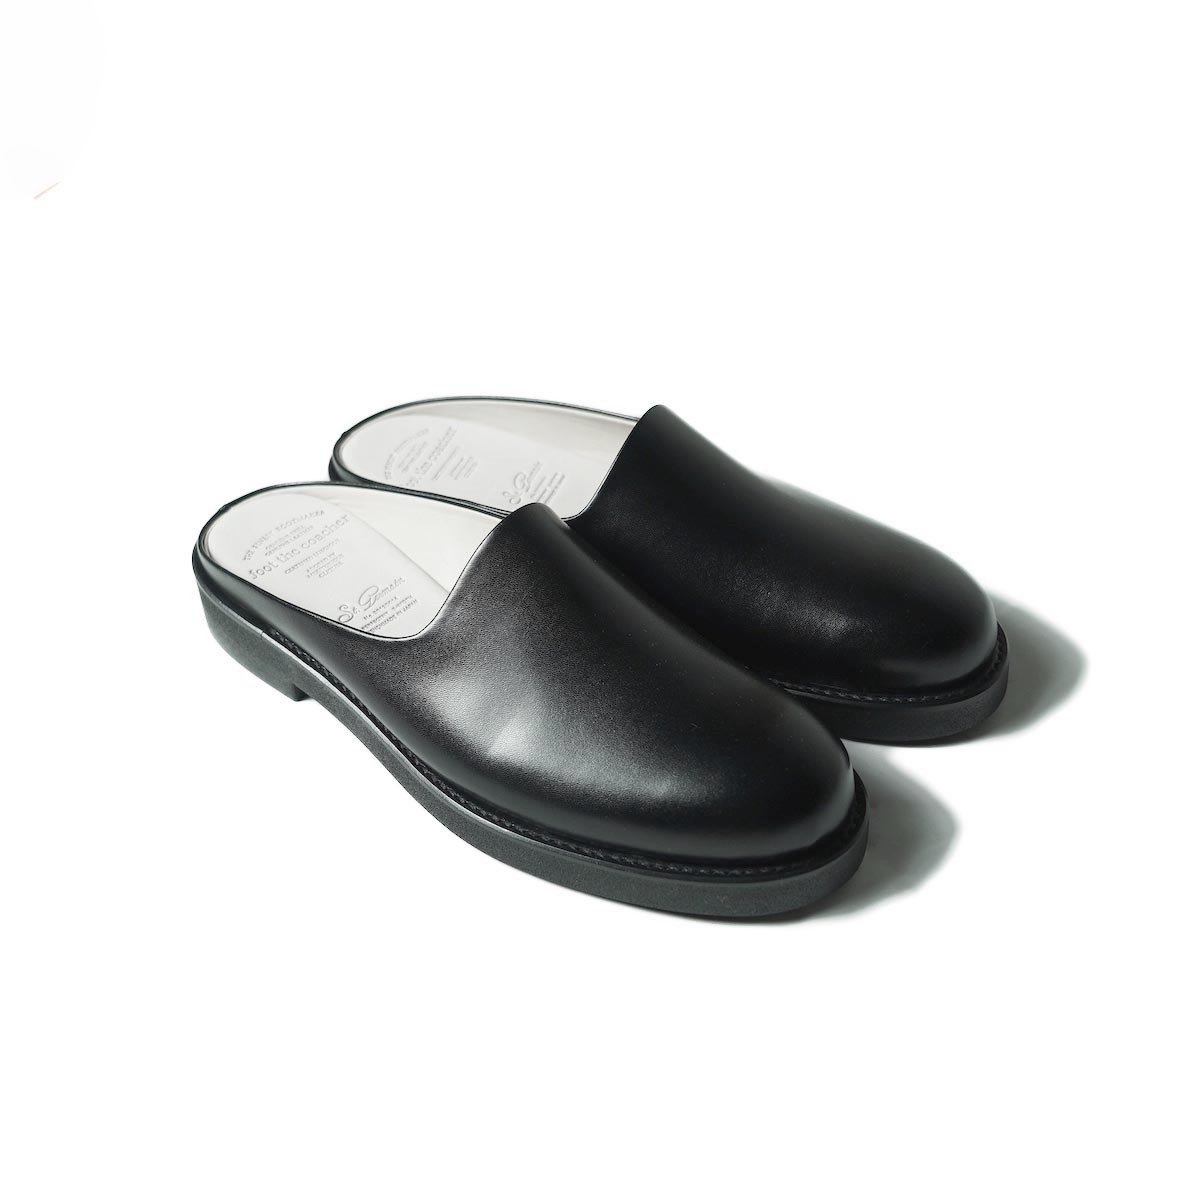 foot the coacher / OPERA SANDALS (HARDNESS 50 SOLE)